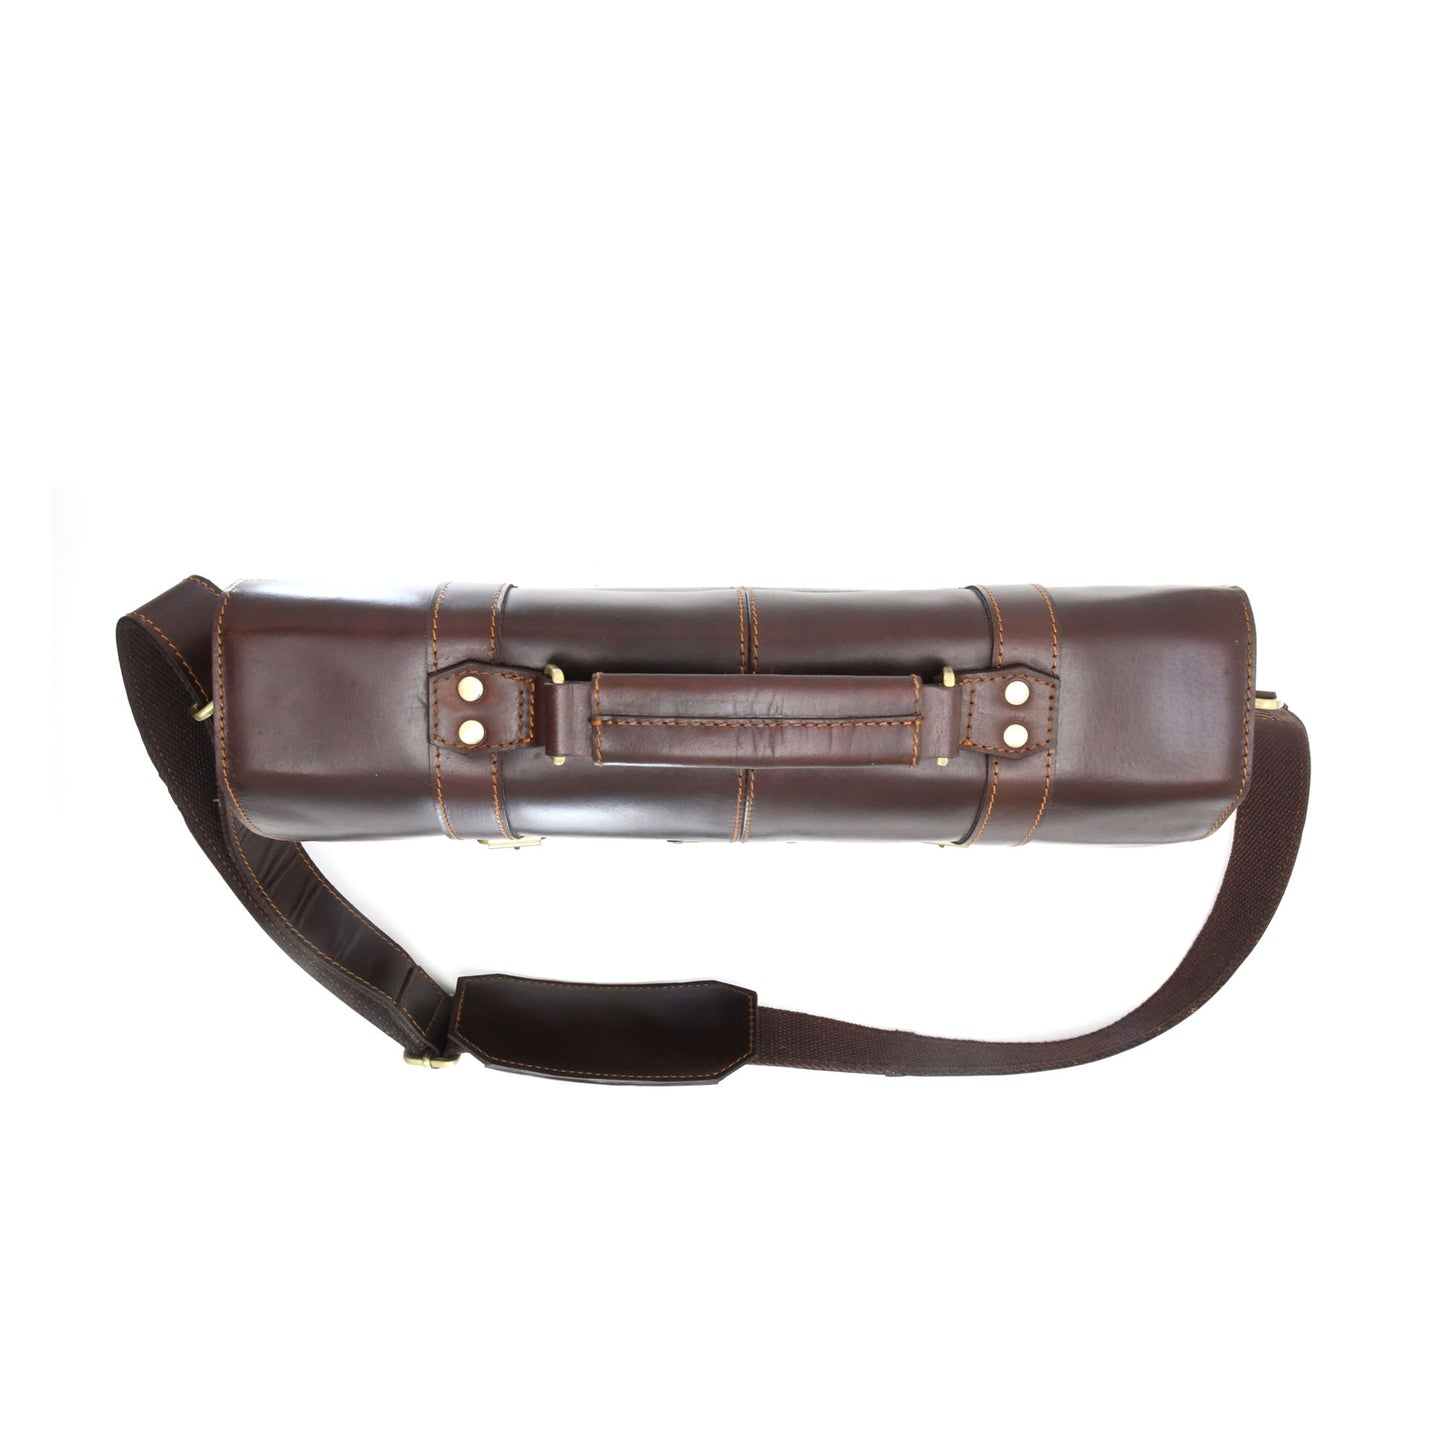 Style n Craft 392007 Portfolio Bag in Full Grain Dark Brown Leather - Top Closed View - Horizontal